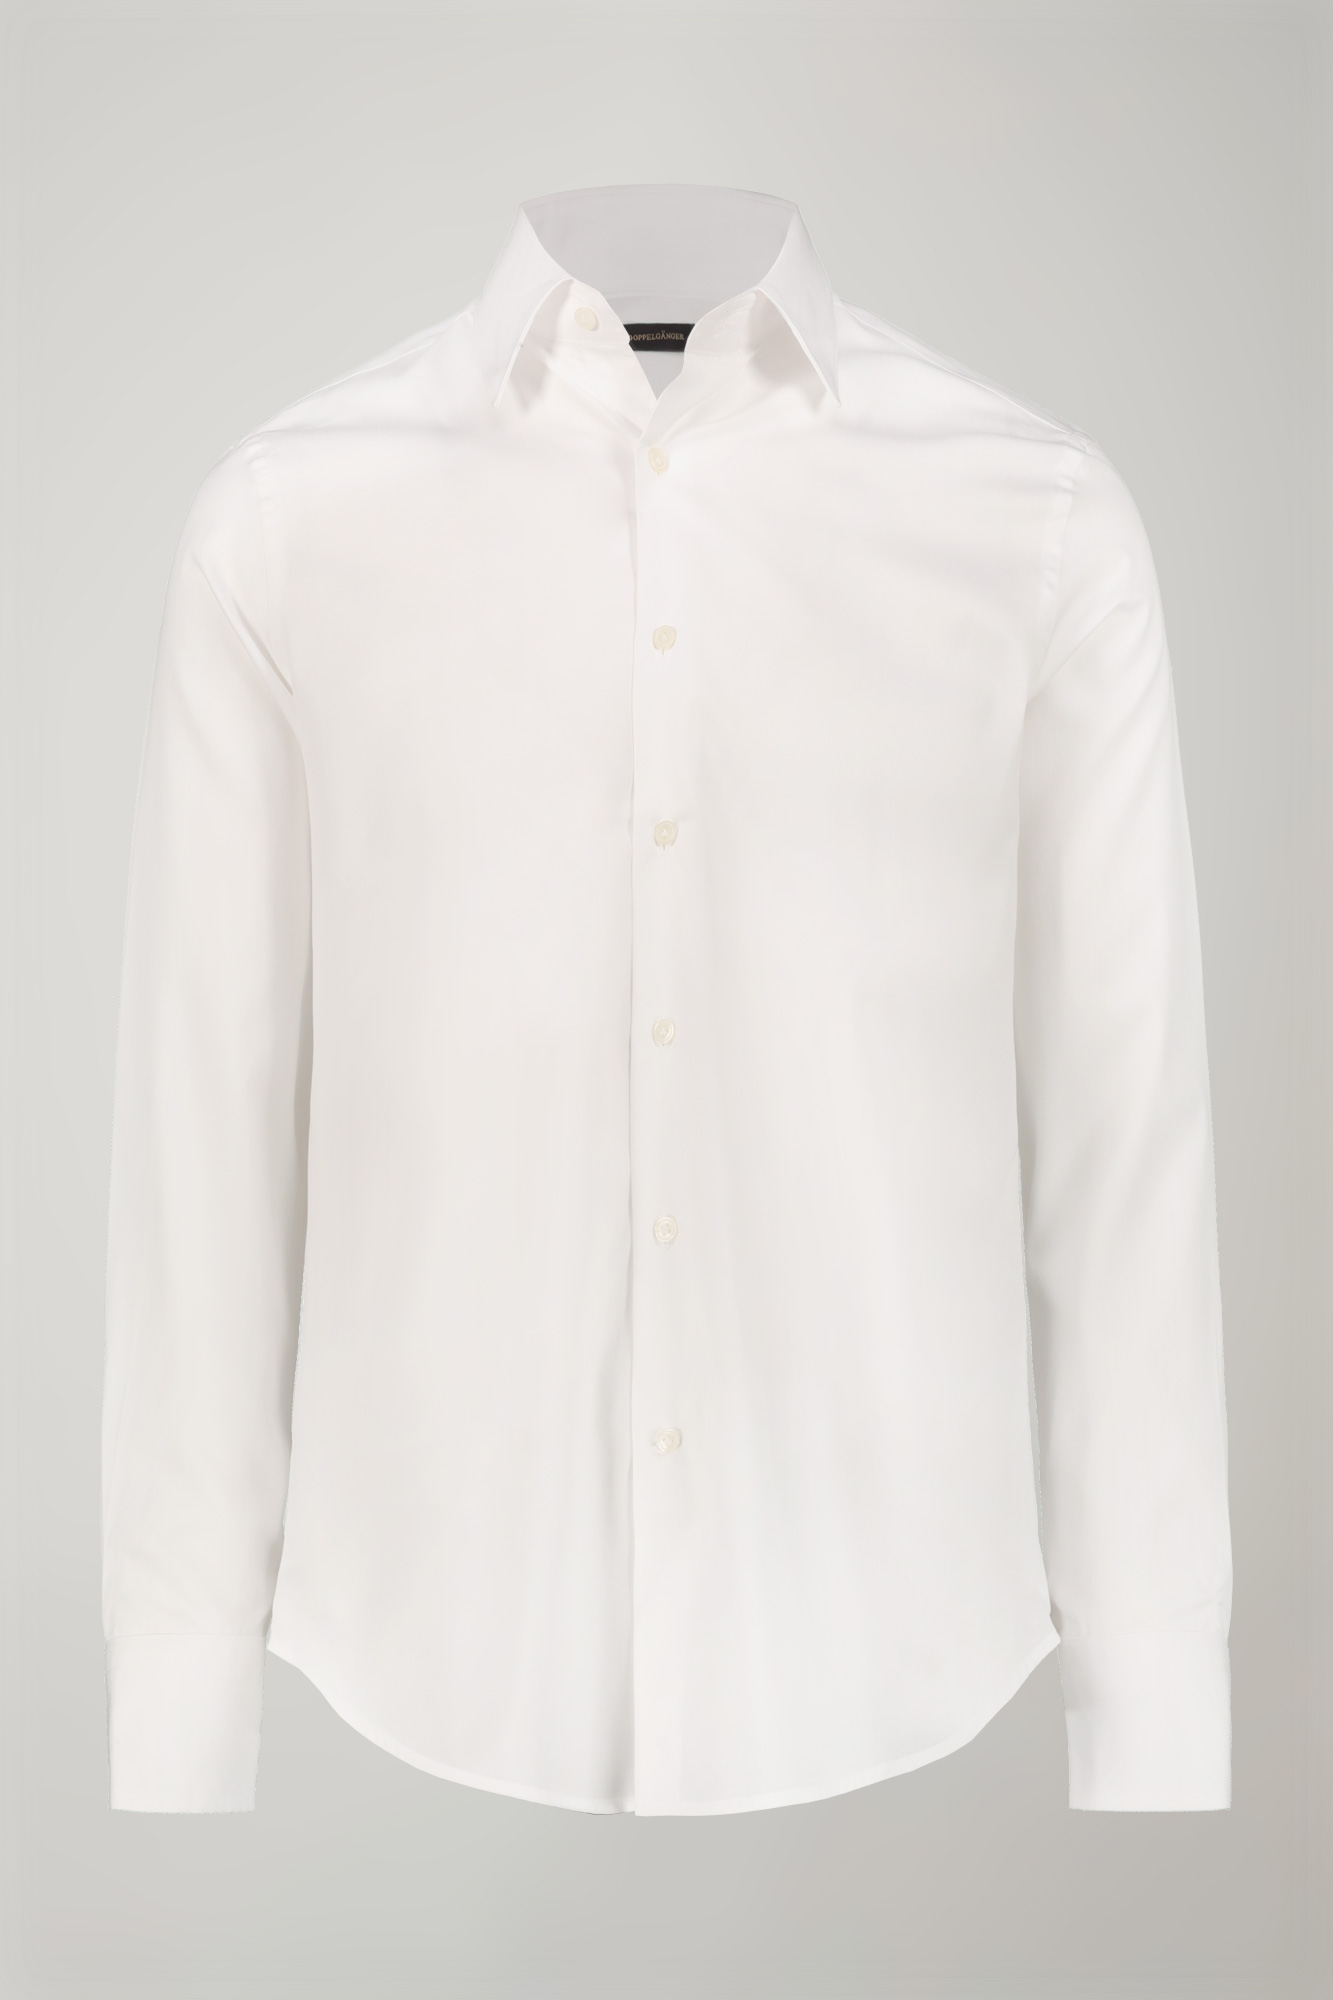 Men's shirt classic collar 100% cotton plain fabric regular fit image number null